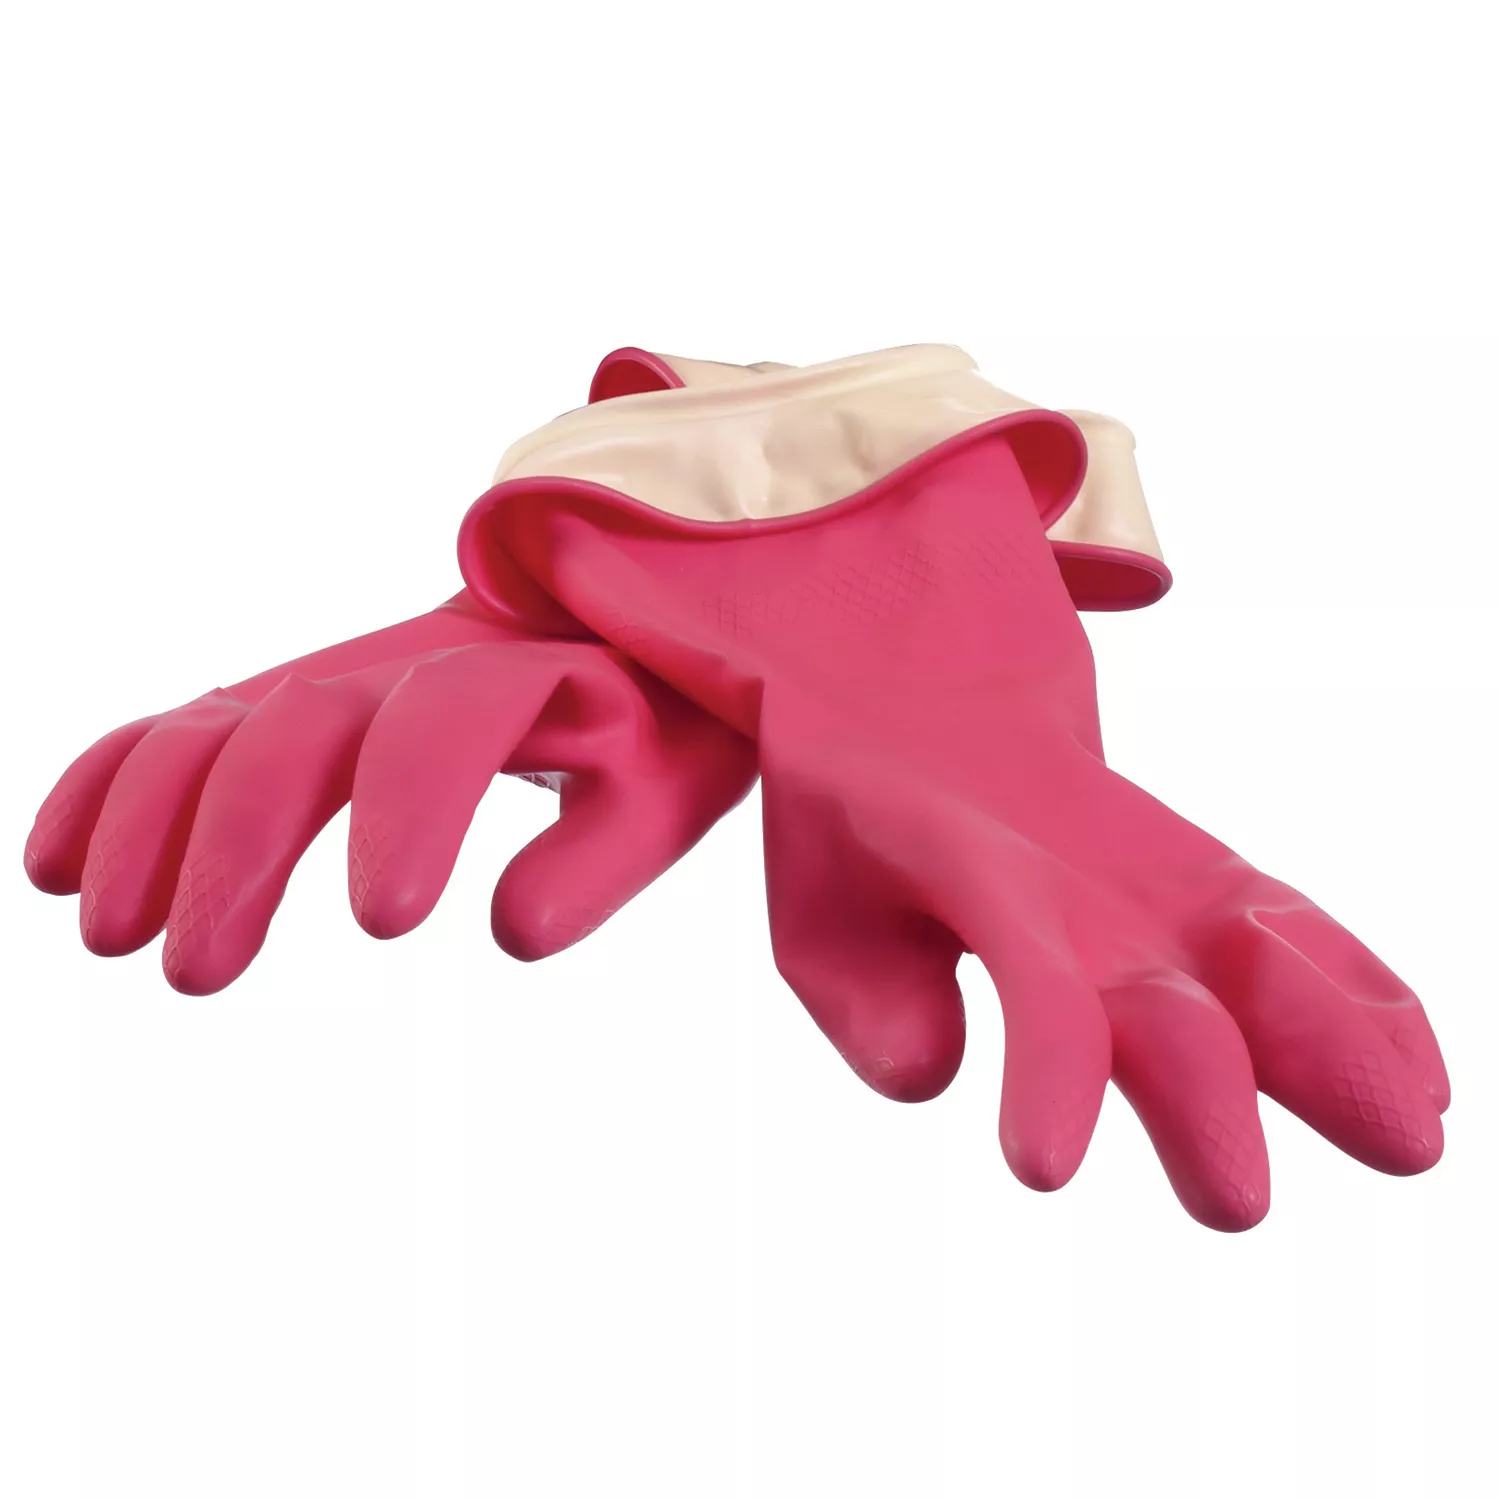 All-Purpose Cleaning Gloves, Medium